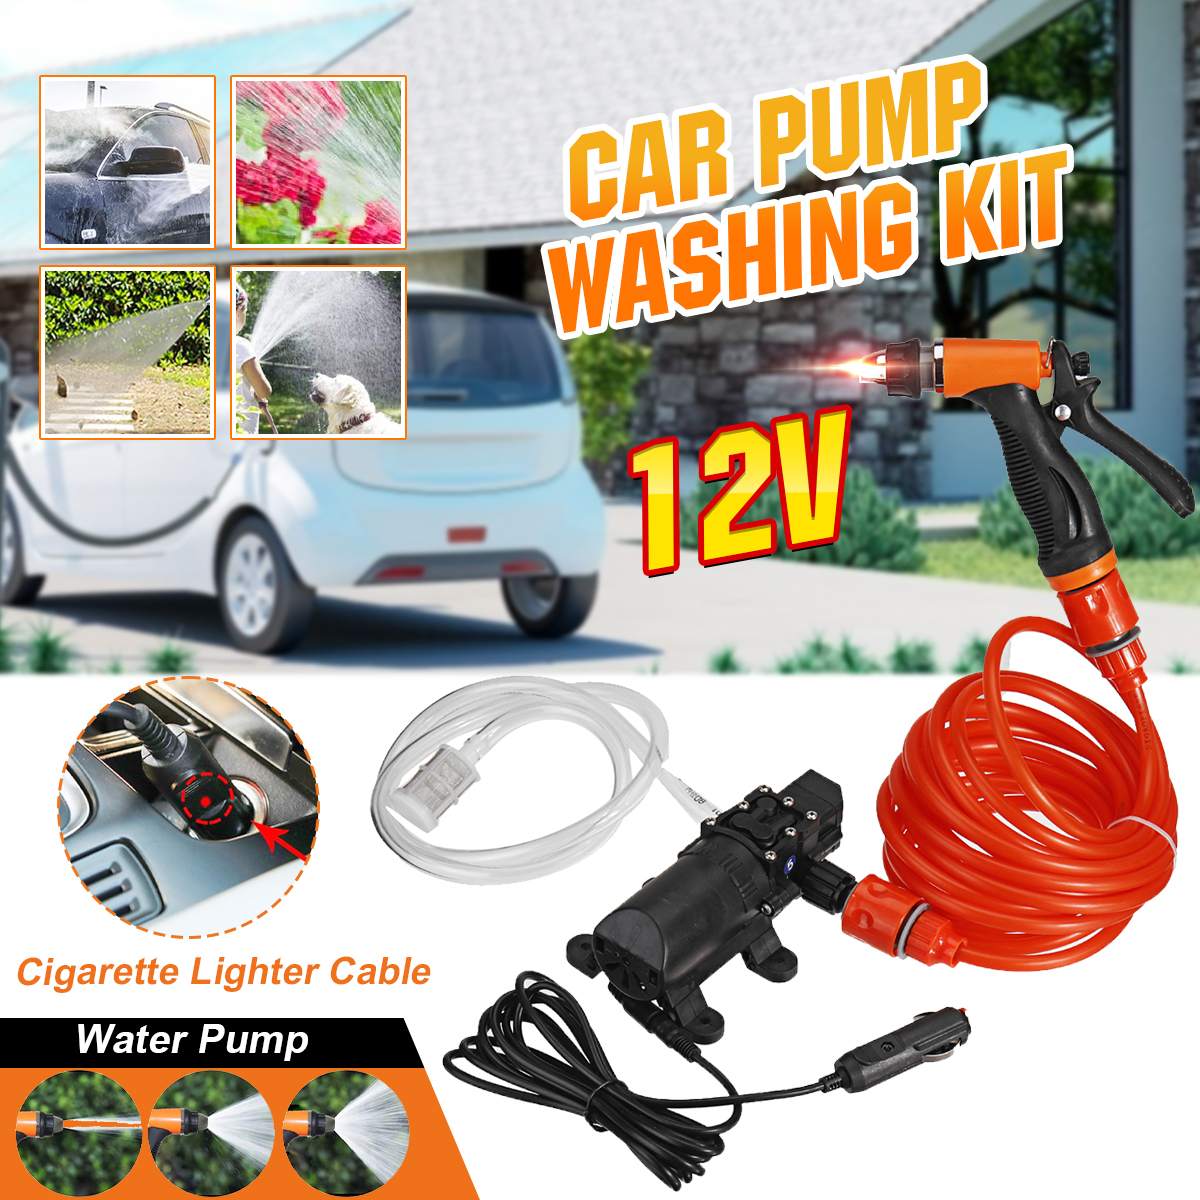 12V-High-Pressure-Cordless-Washer-Spray-Guns-Water-Guns-Cleaner--Car-Pump-Washing-Kit-1901193-2